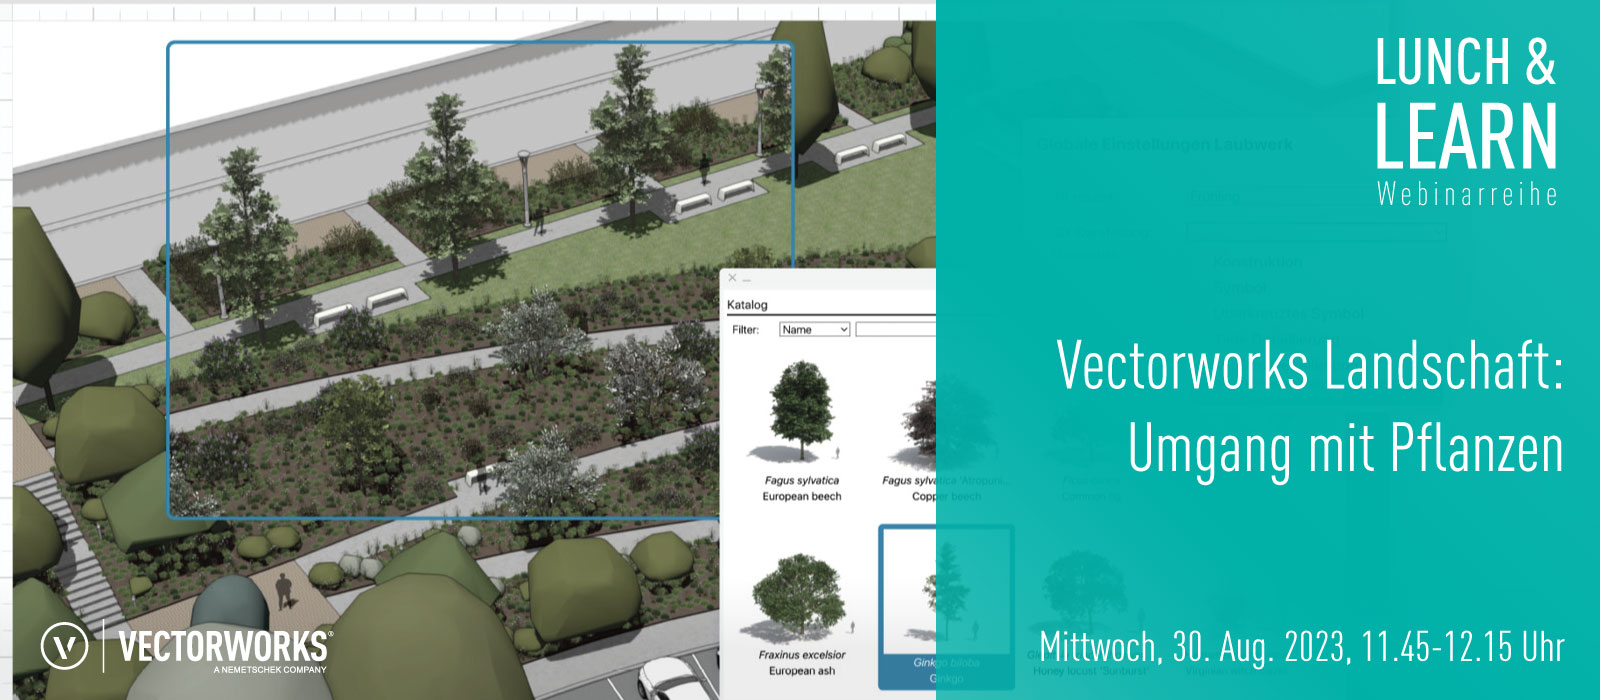 Vectorworks Landschaft: Umgang mit Pflanzen